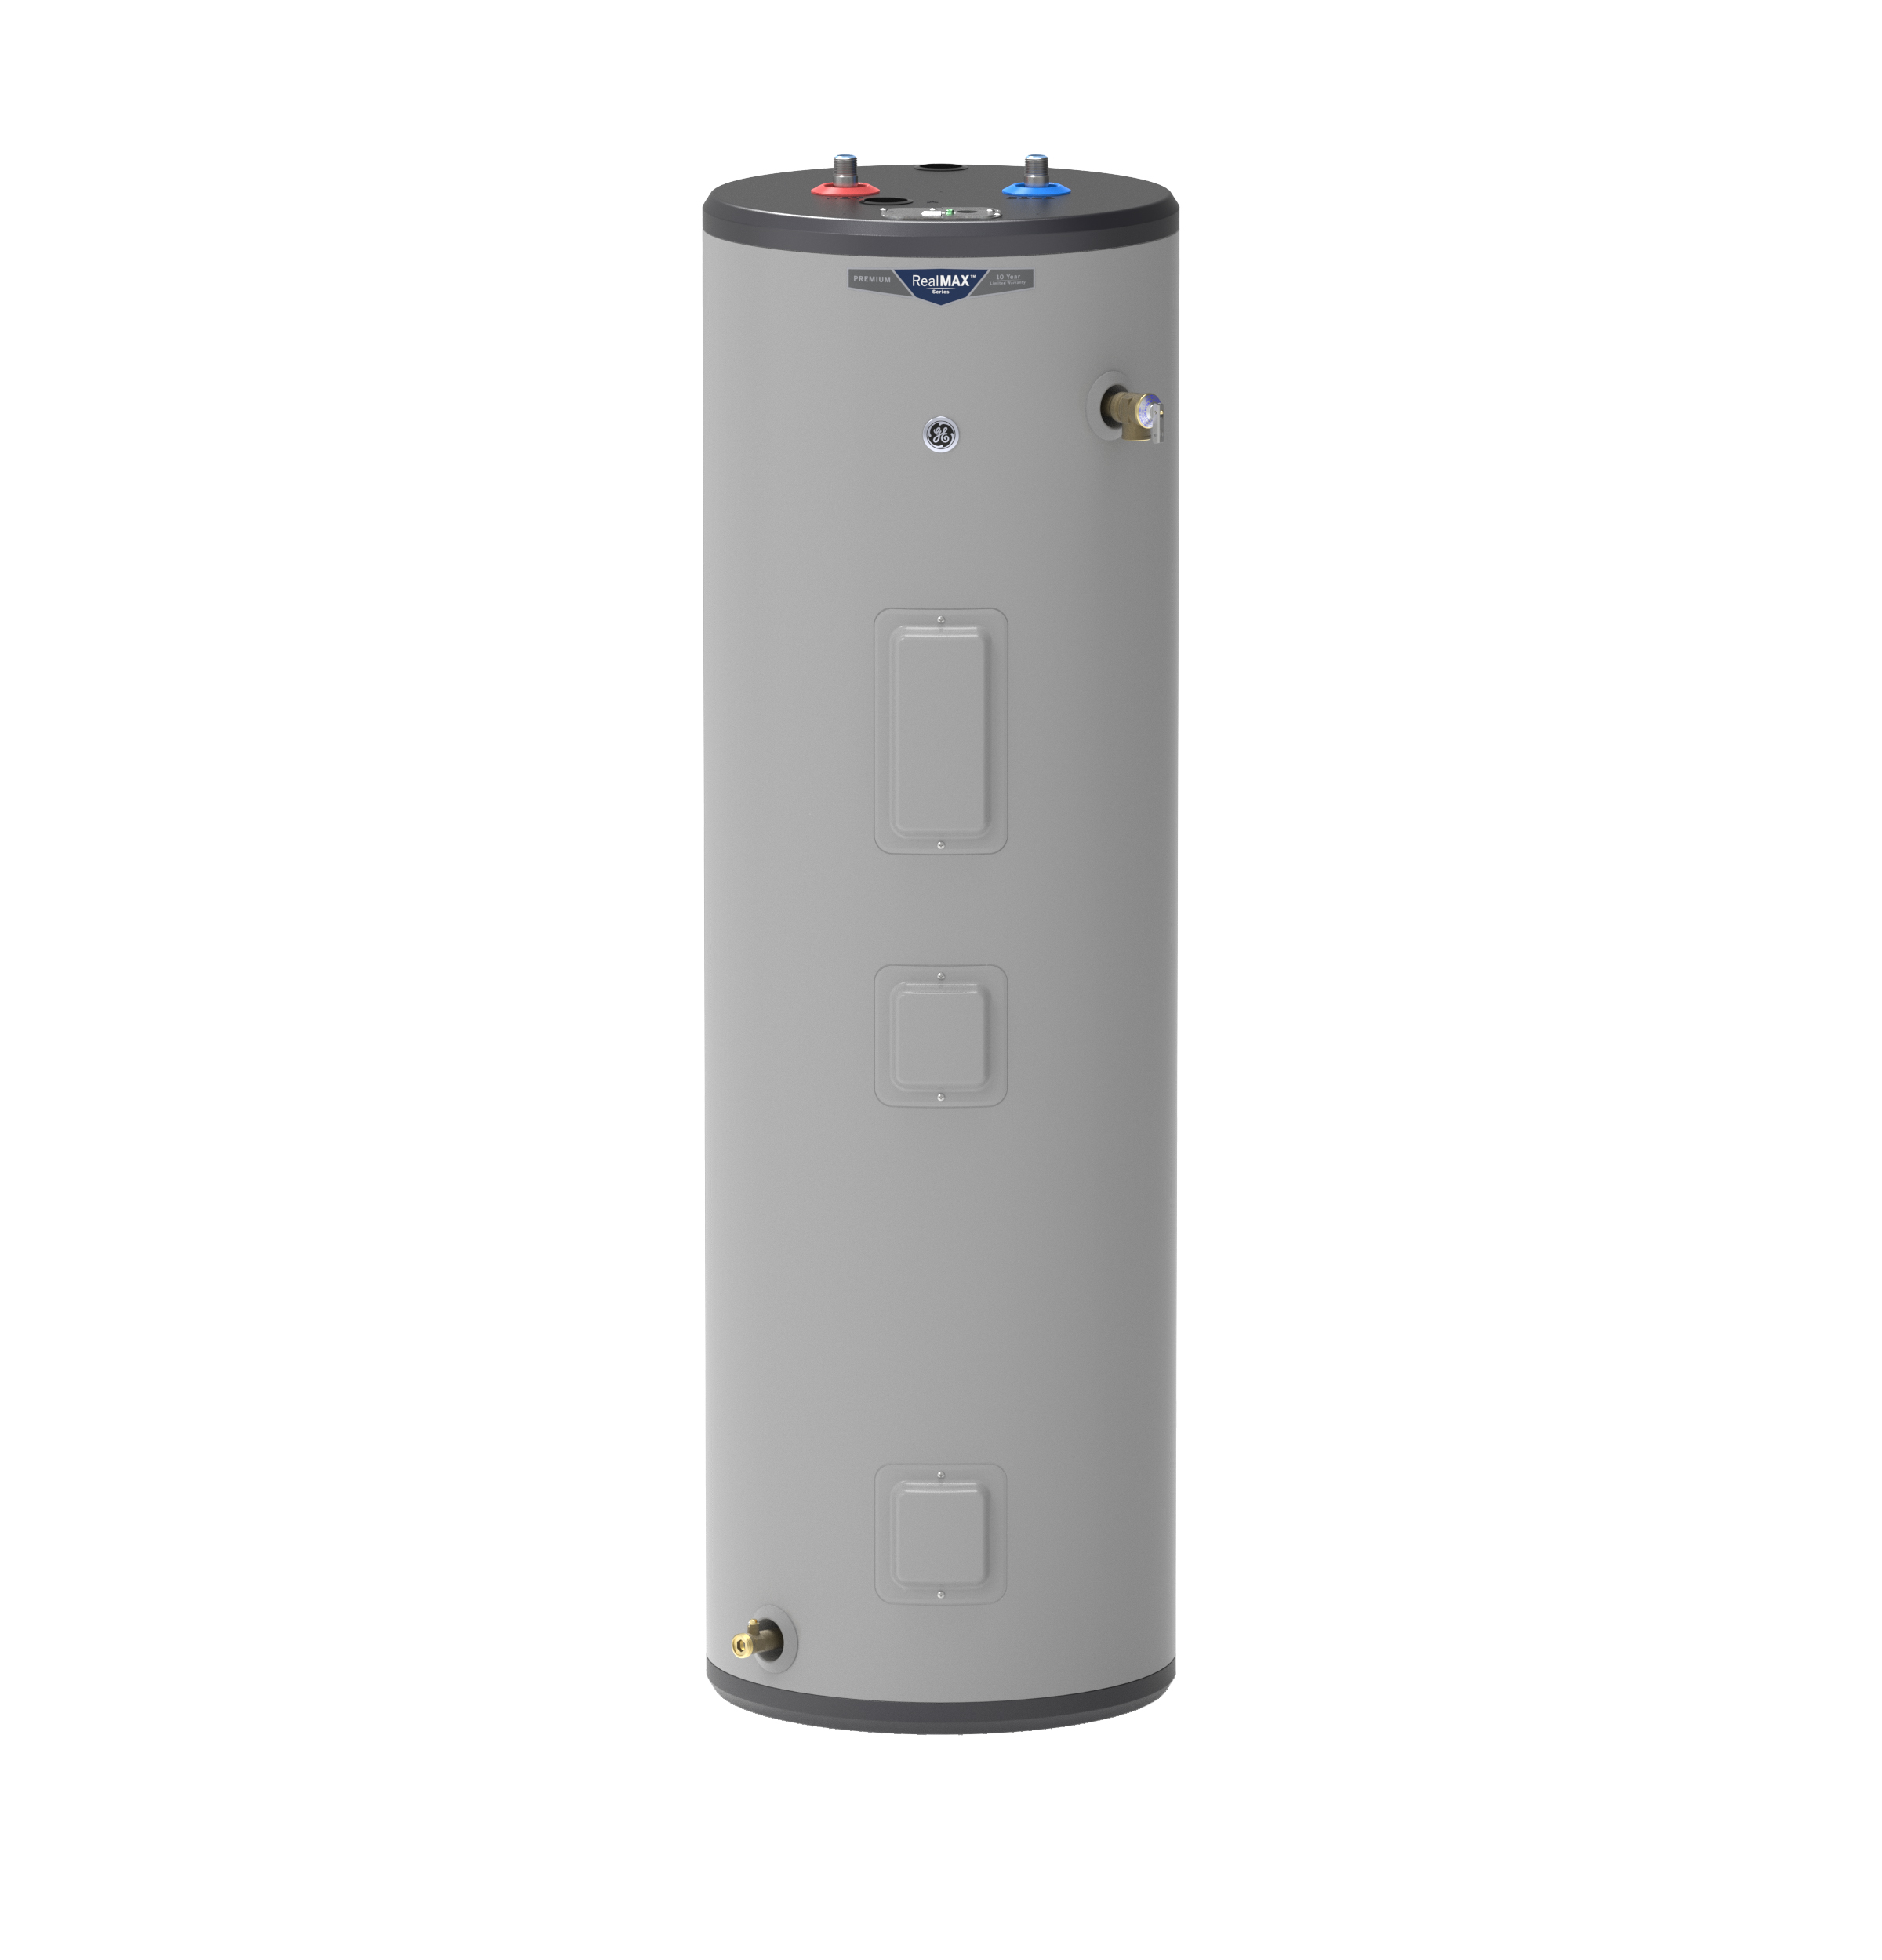 GE® 40 Gallon Tall Electric Water Heater